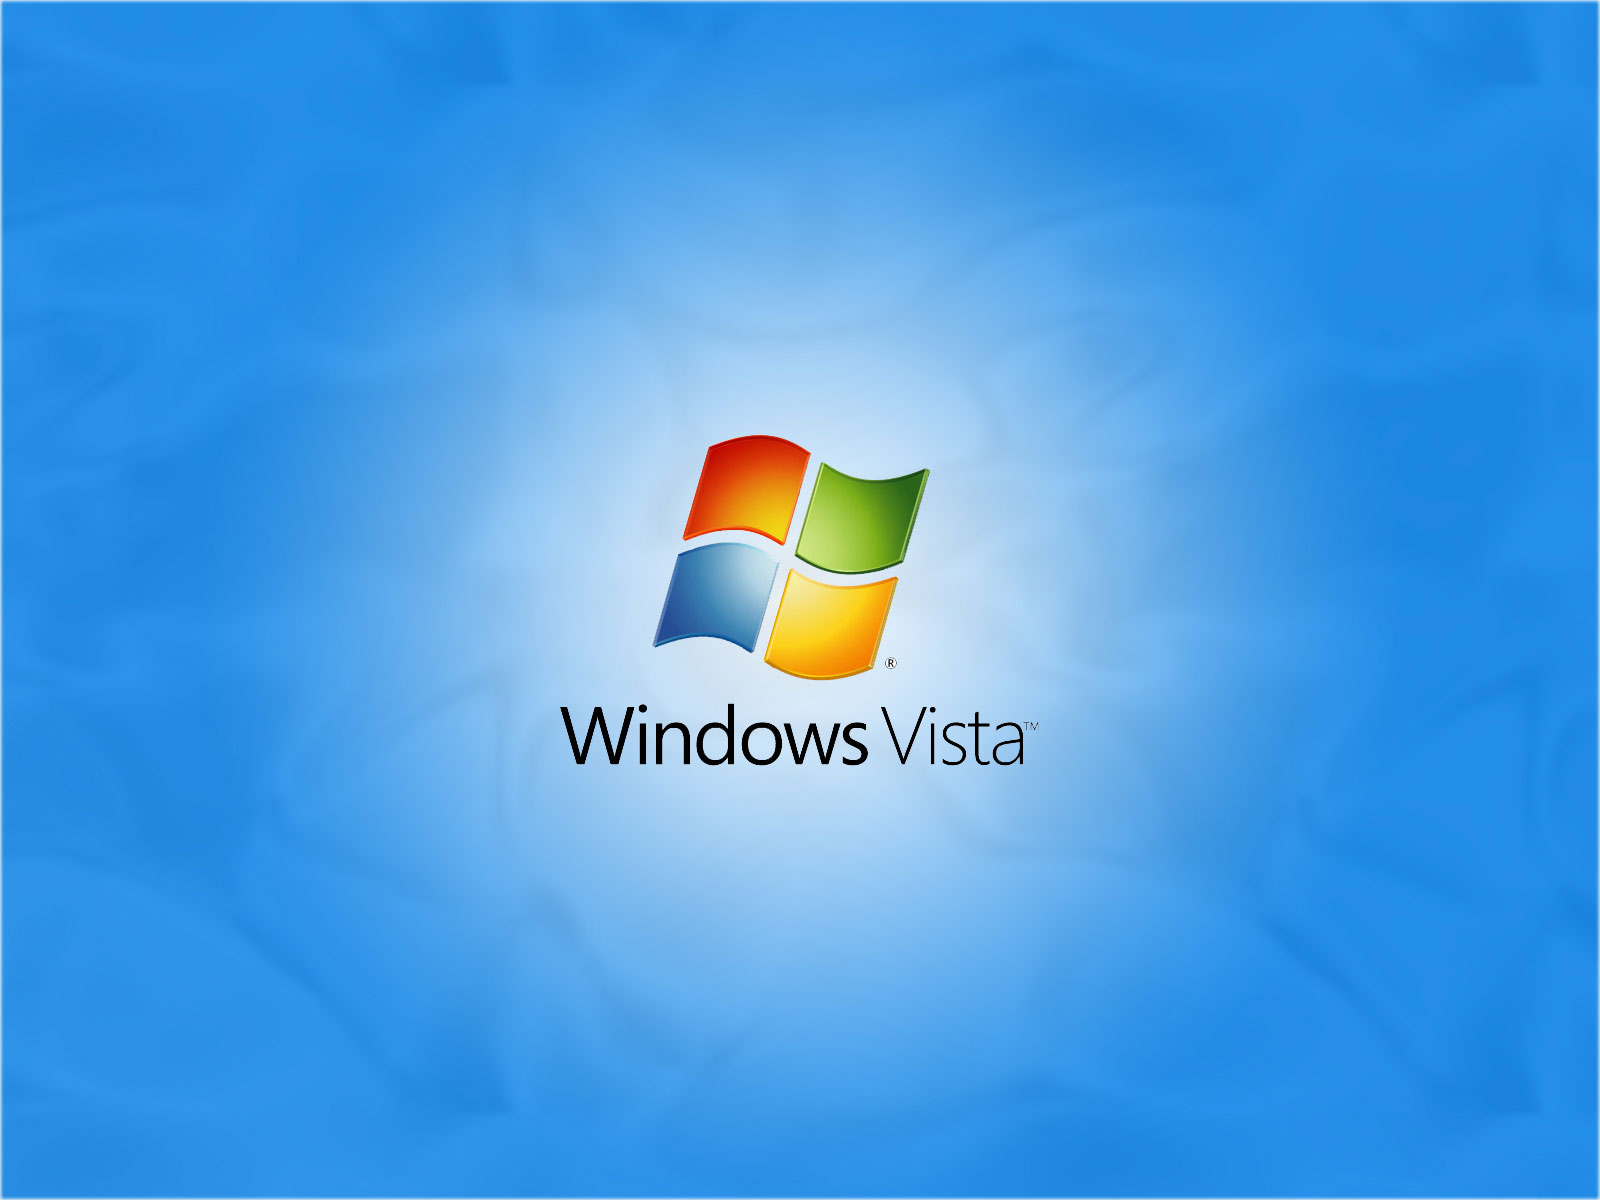 Windows Vista Wallpapers Windows 7 Backgrounds